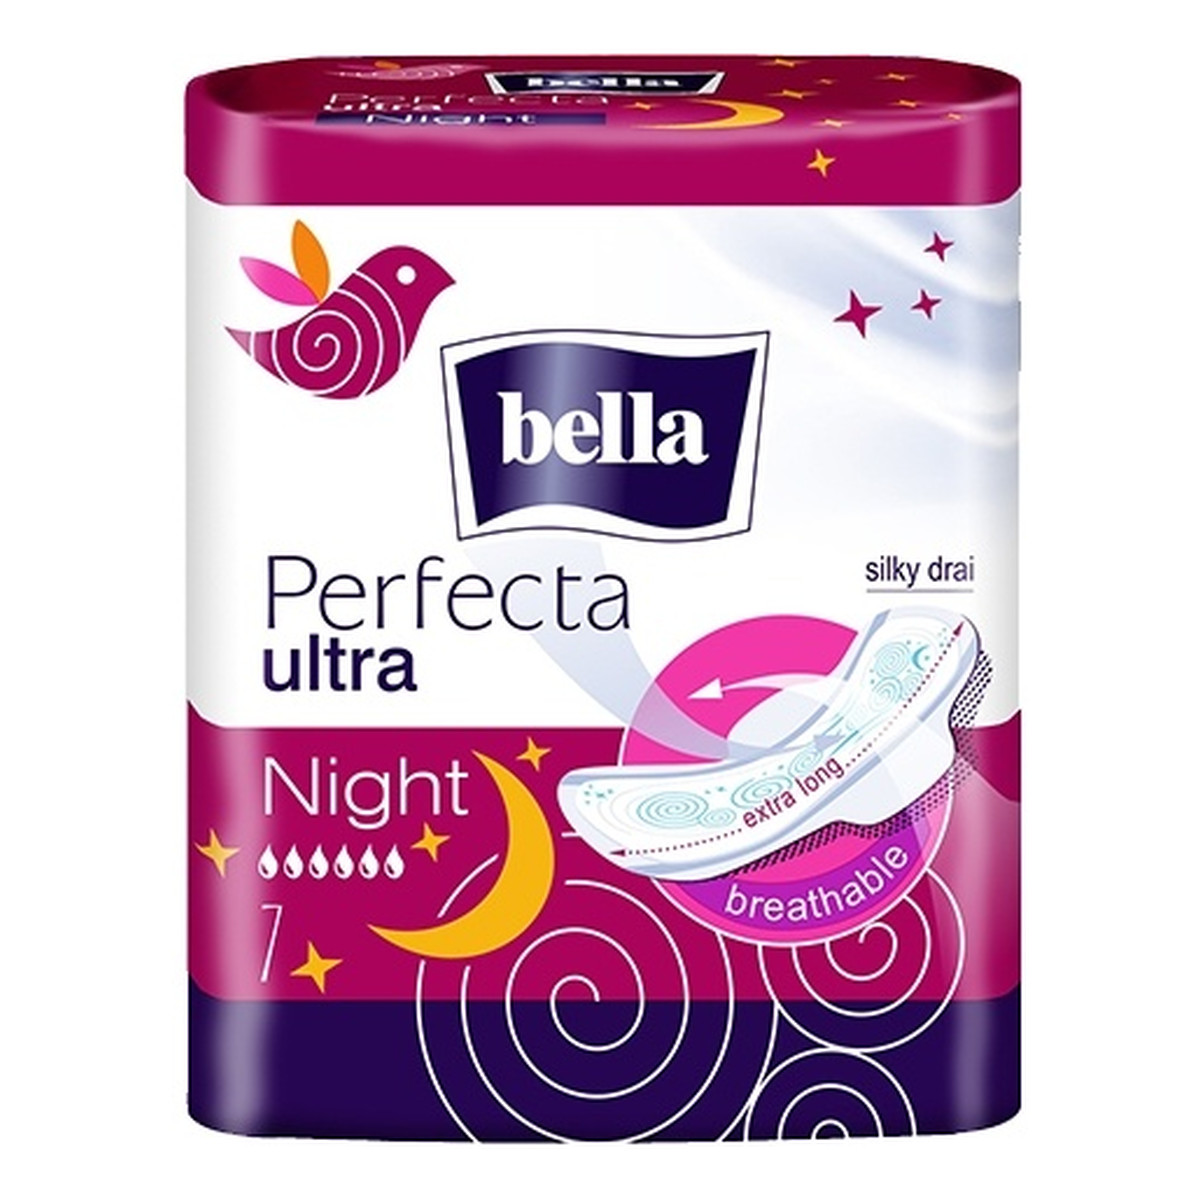 Bella Ultra Night XXL Perfecta Podpaski Higieniczne 7 Sztuk